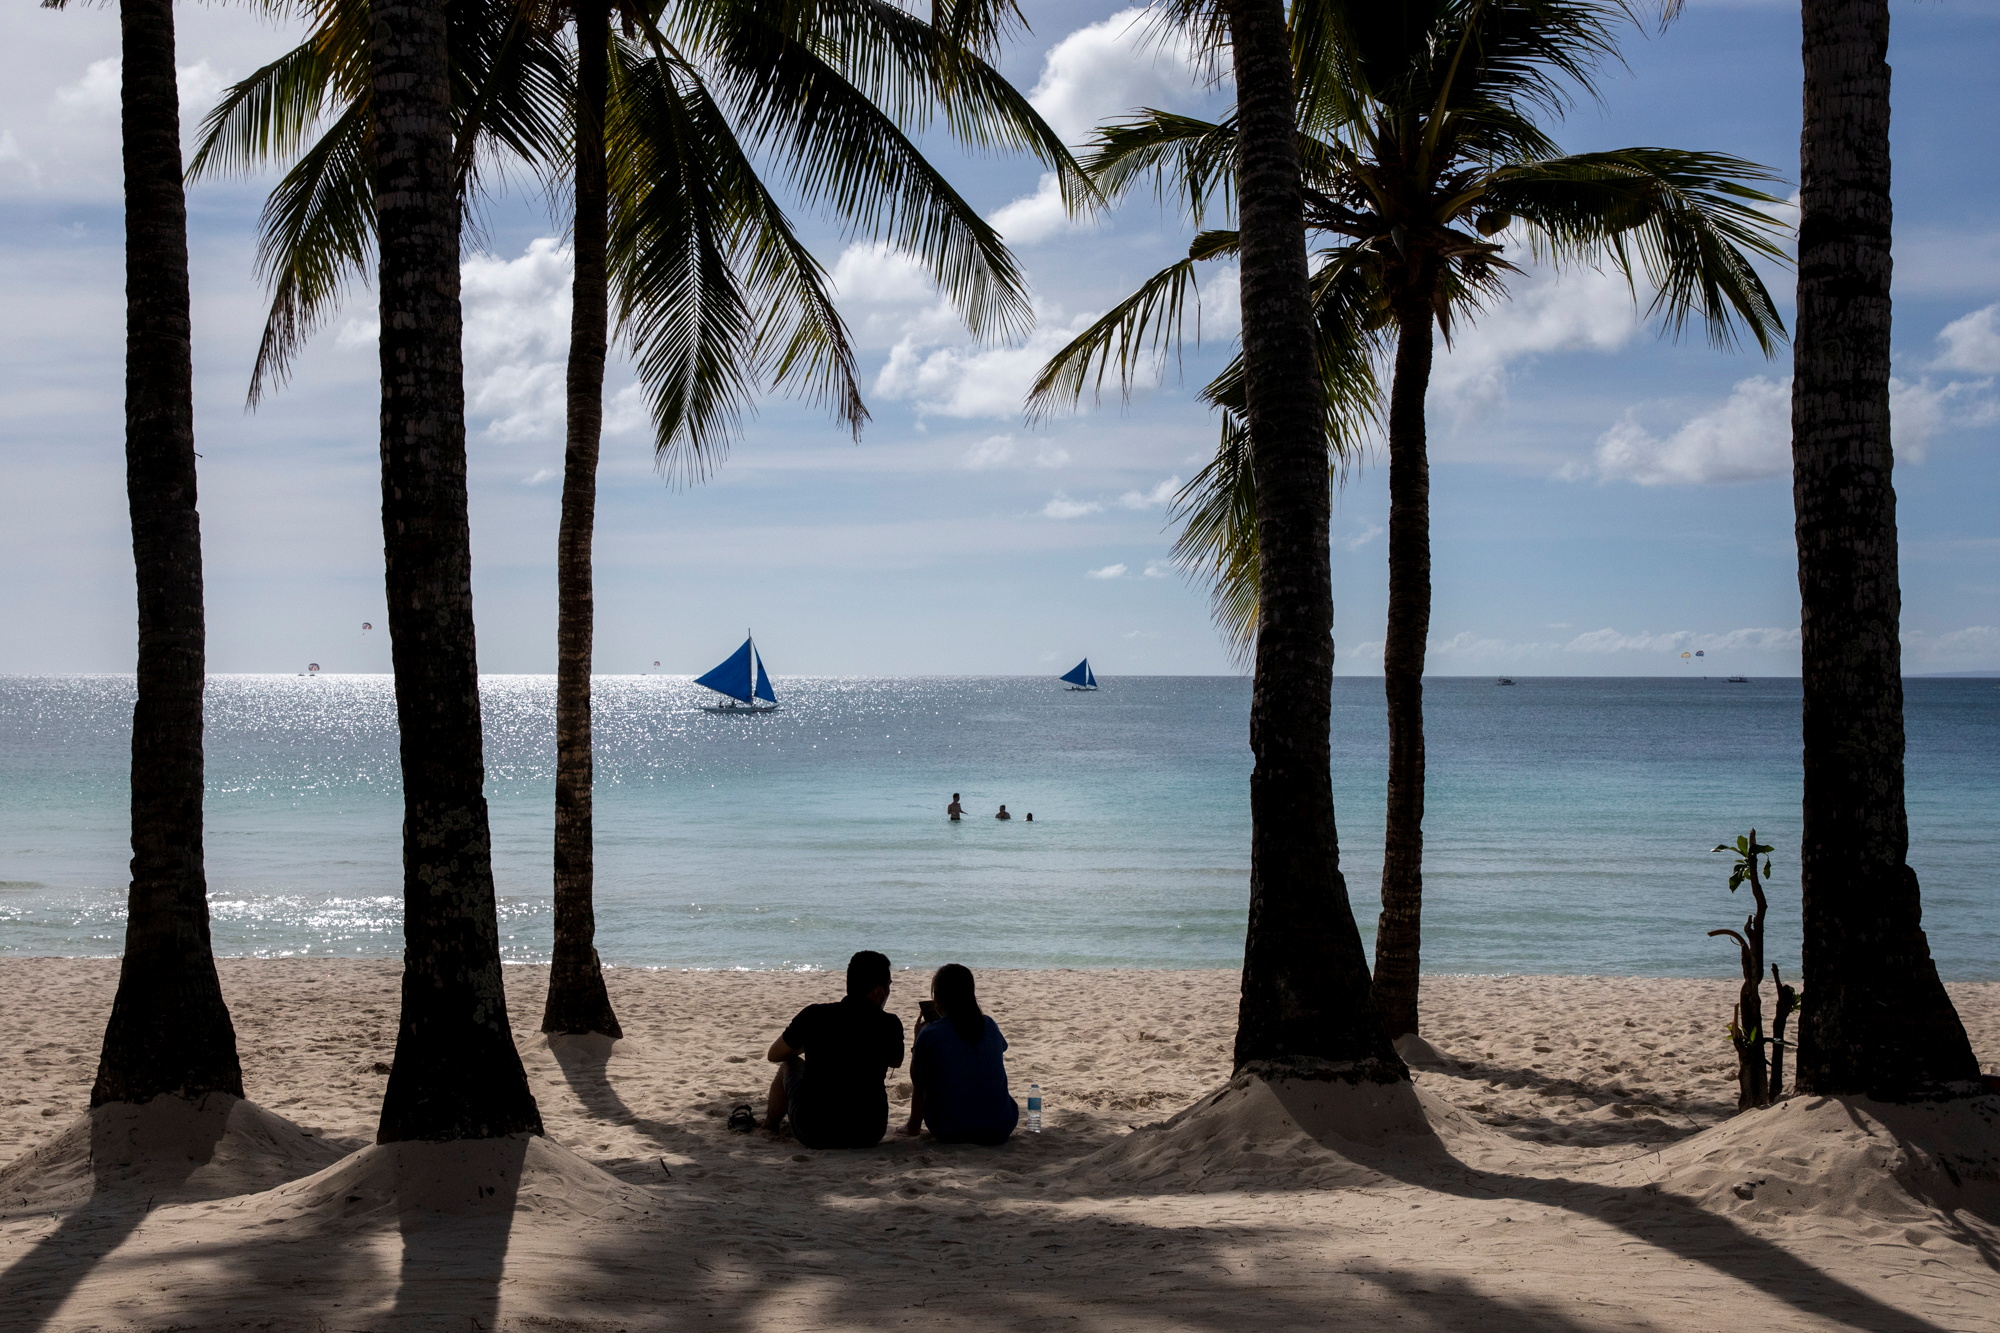 Philippine holiday island amid COVID-19 outbreak